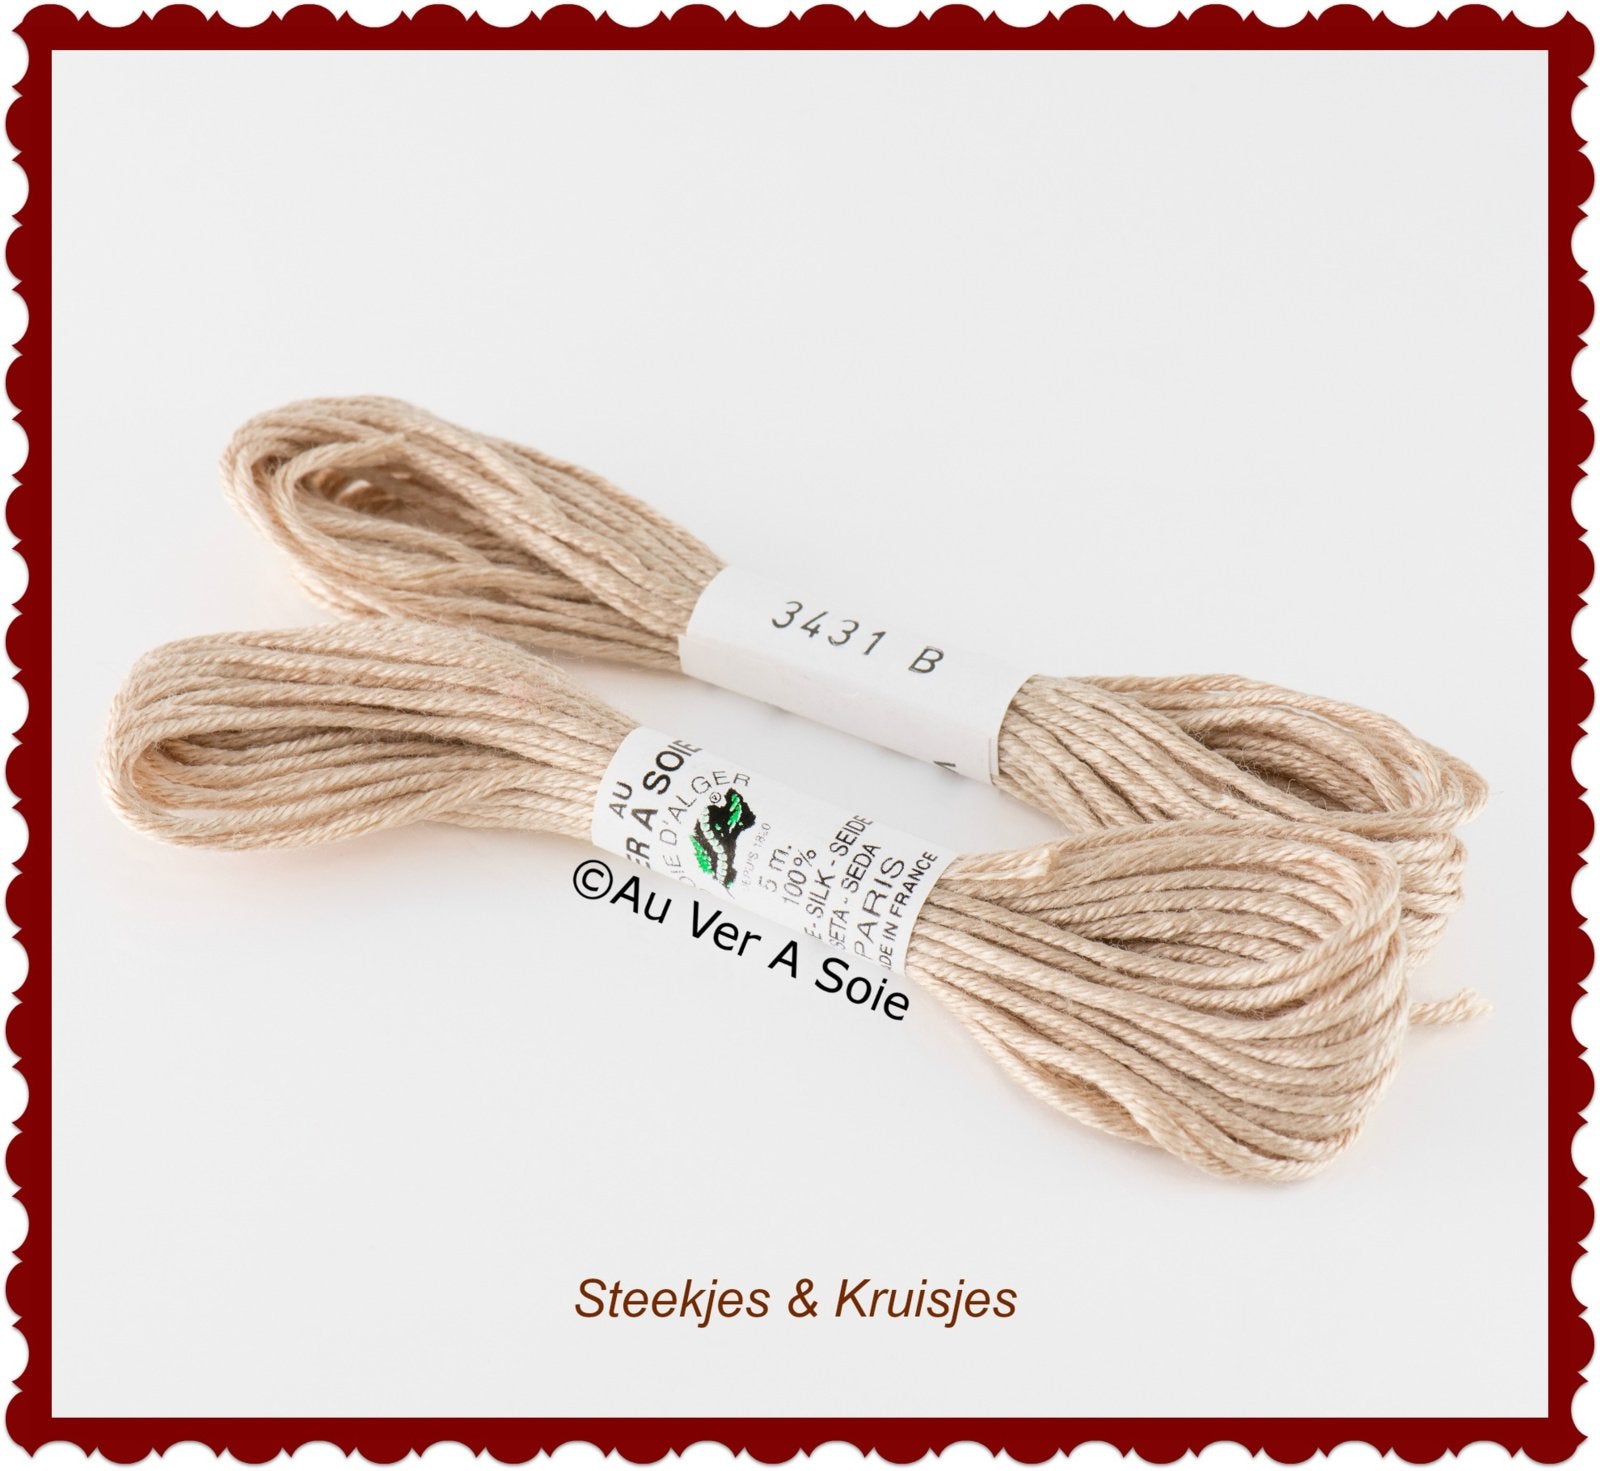 Au ver ie "soie d'alger" silk yarn color no. 3431